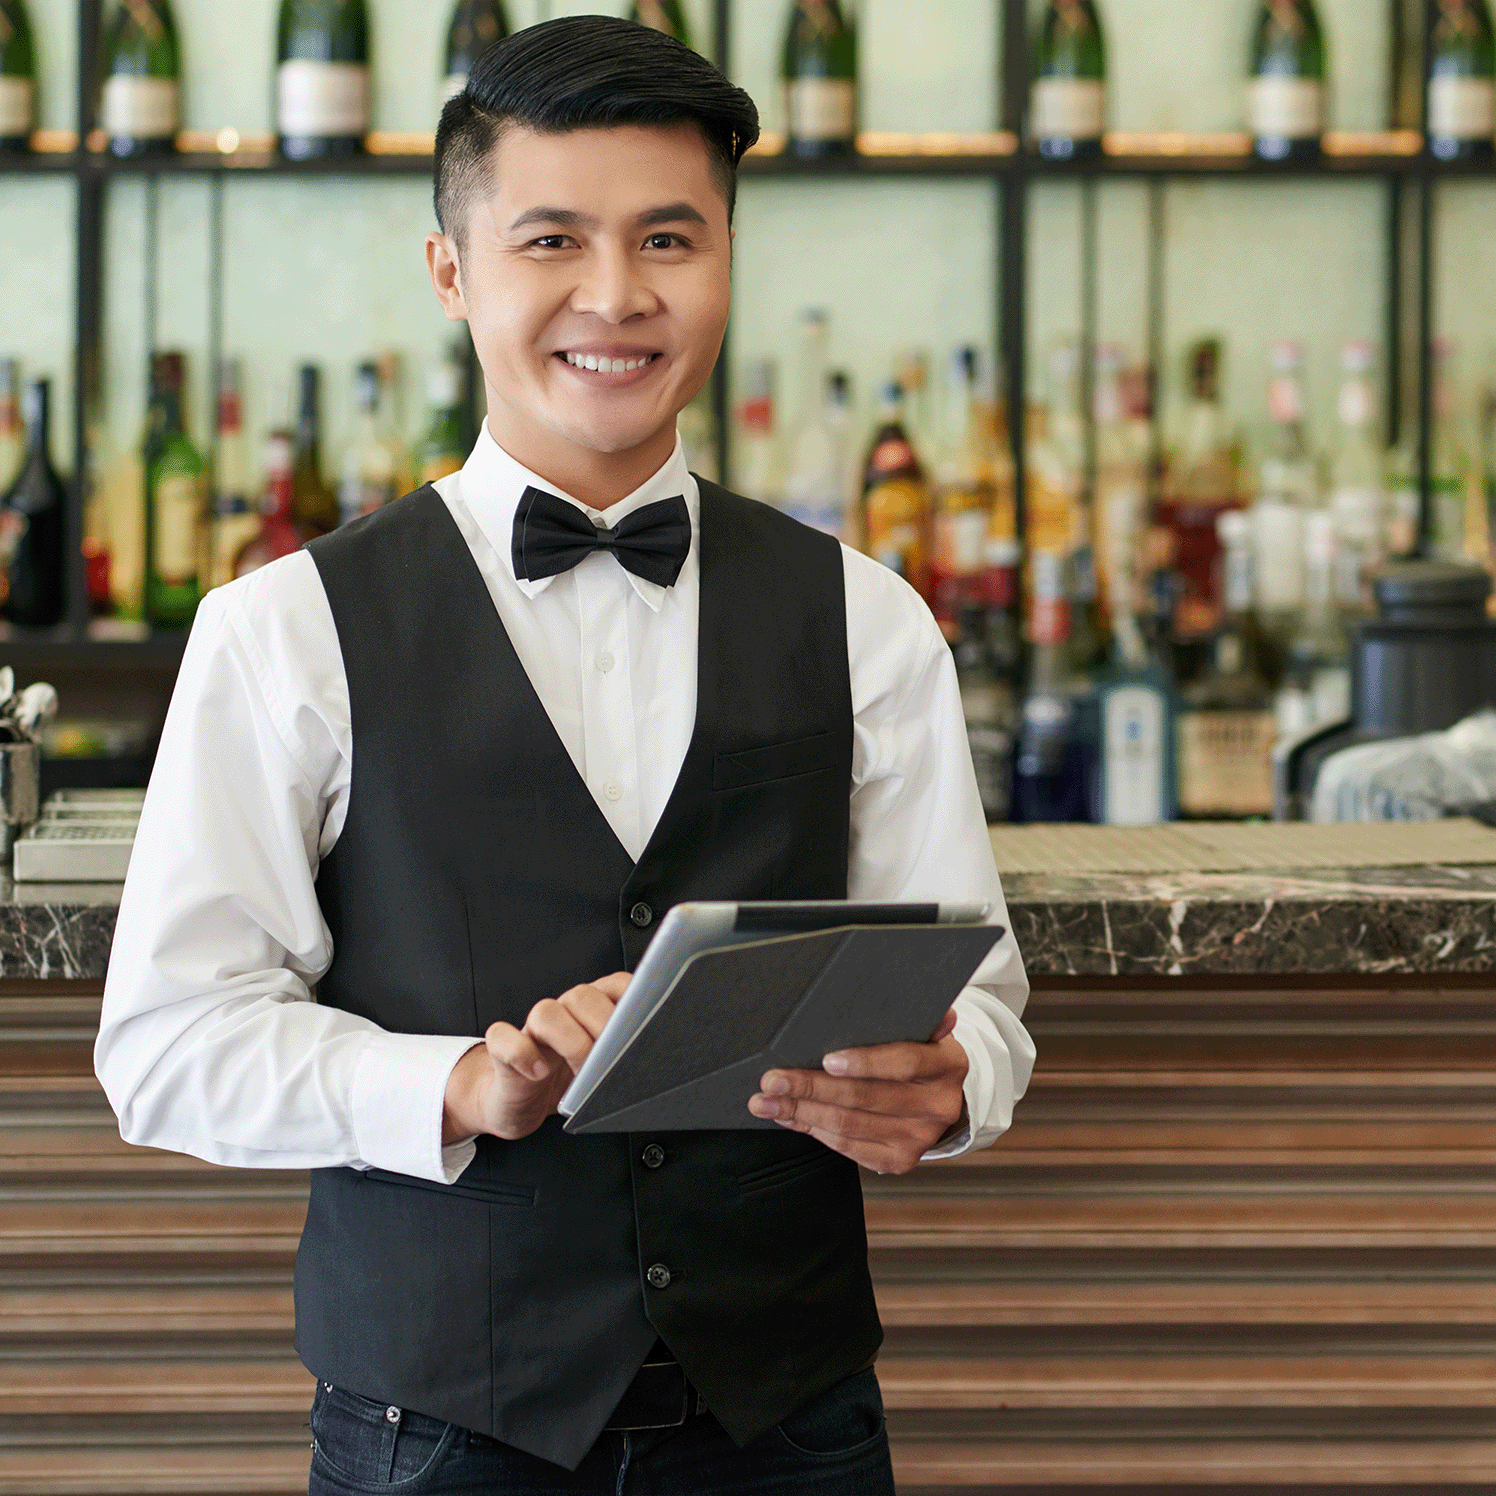 Customer Service in Hospitality